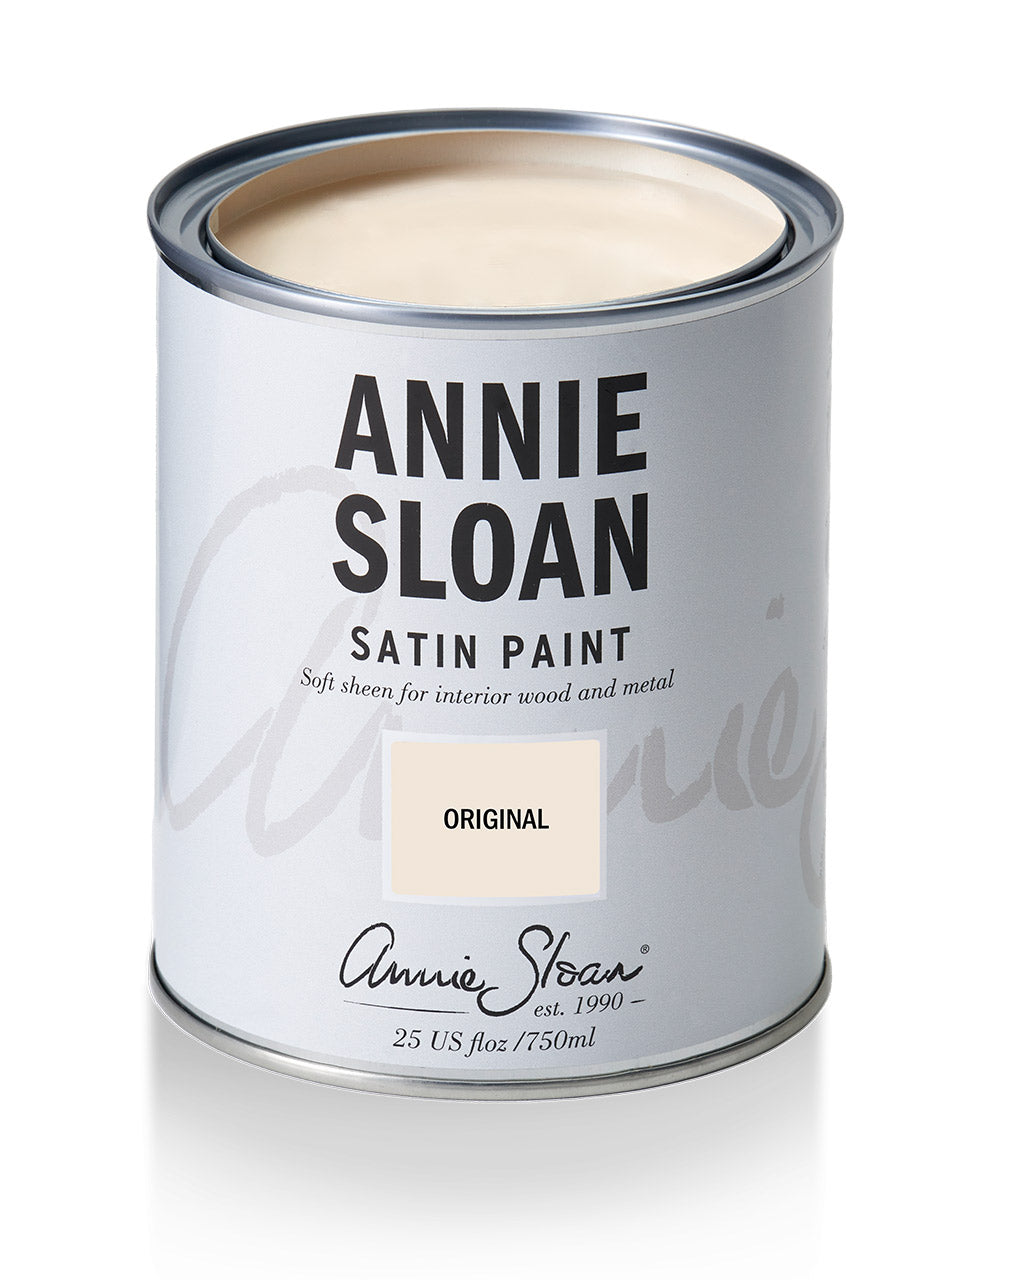 Original Satin Paint by Annie Sloan